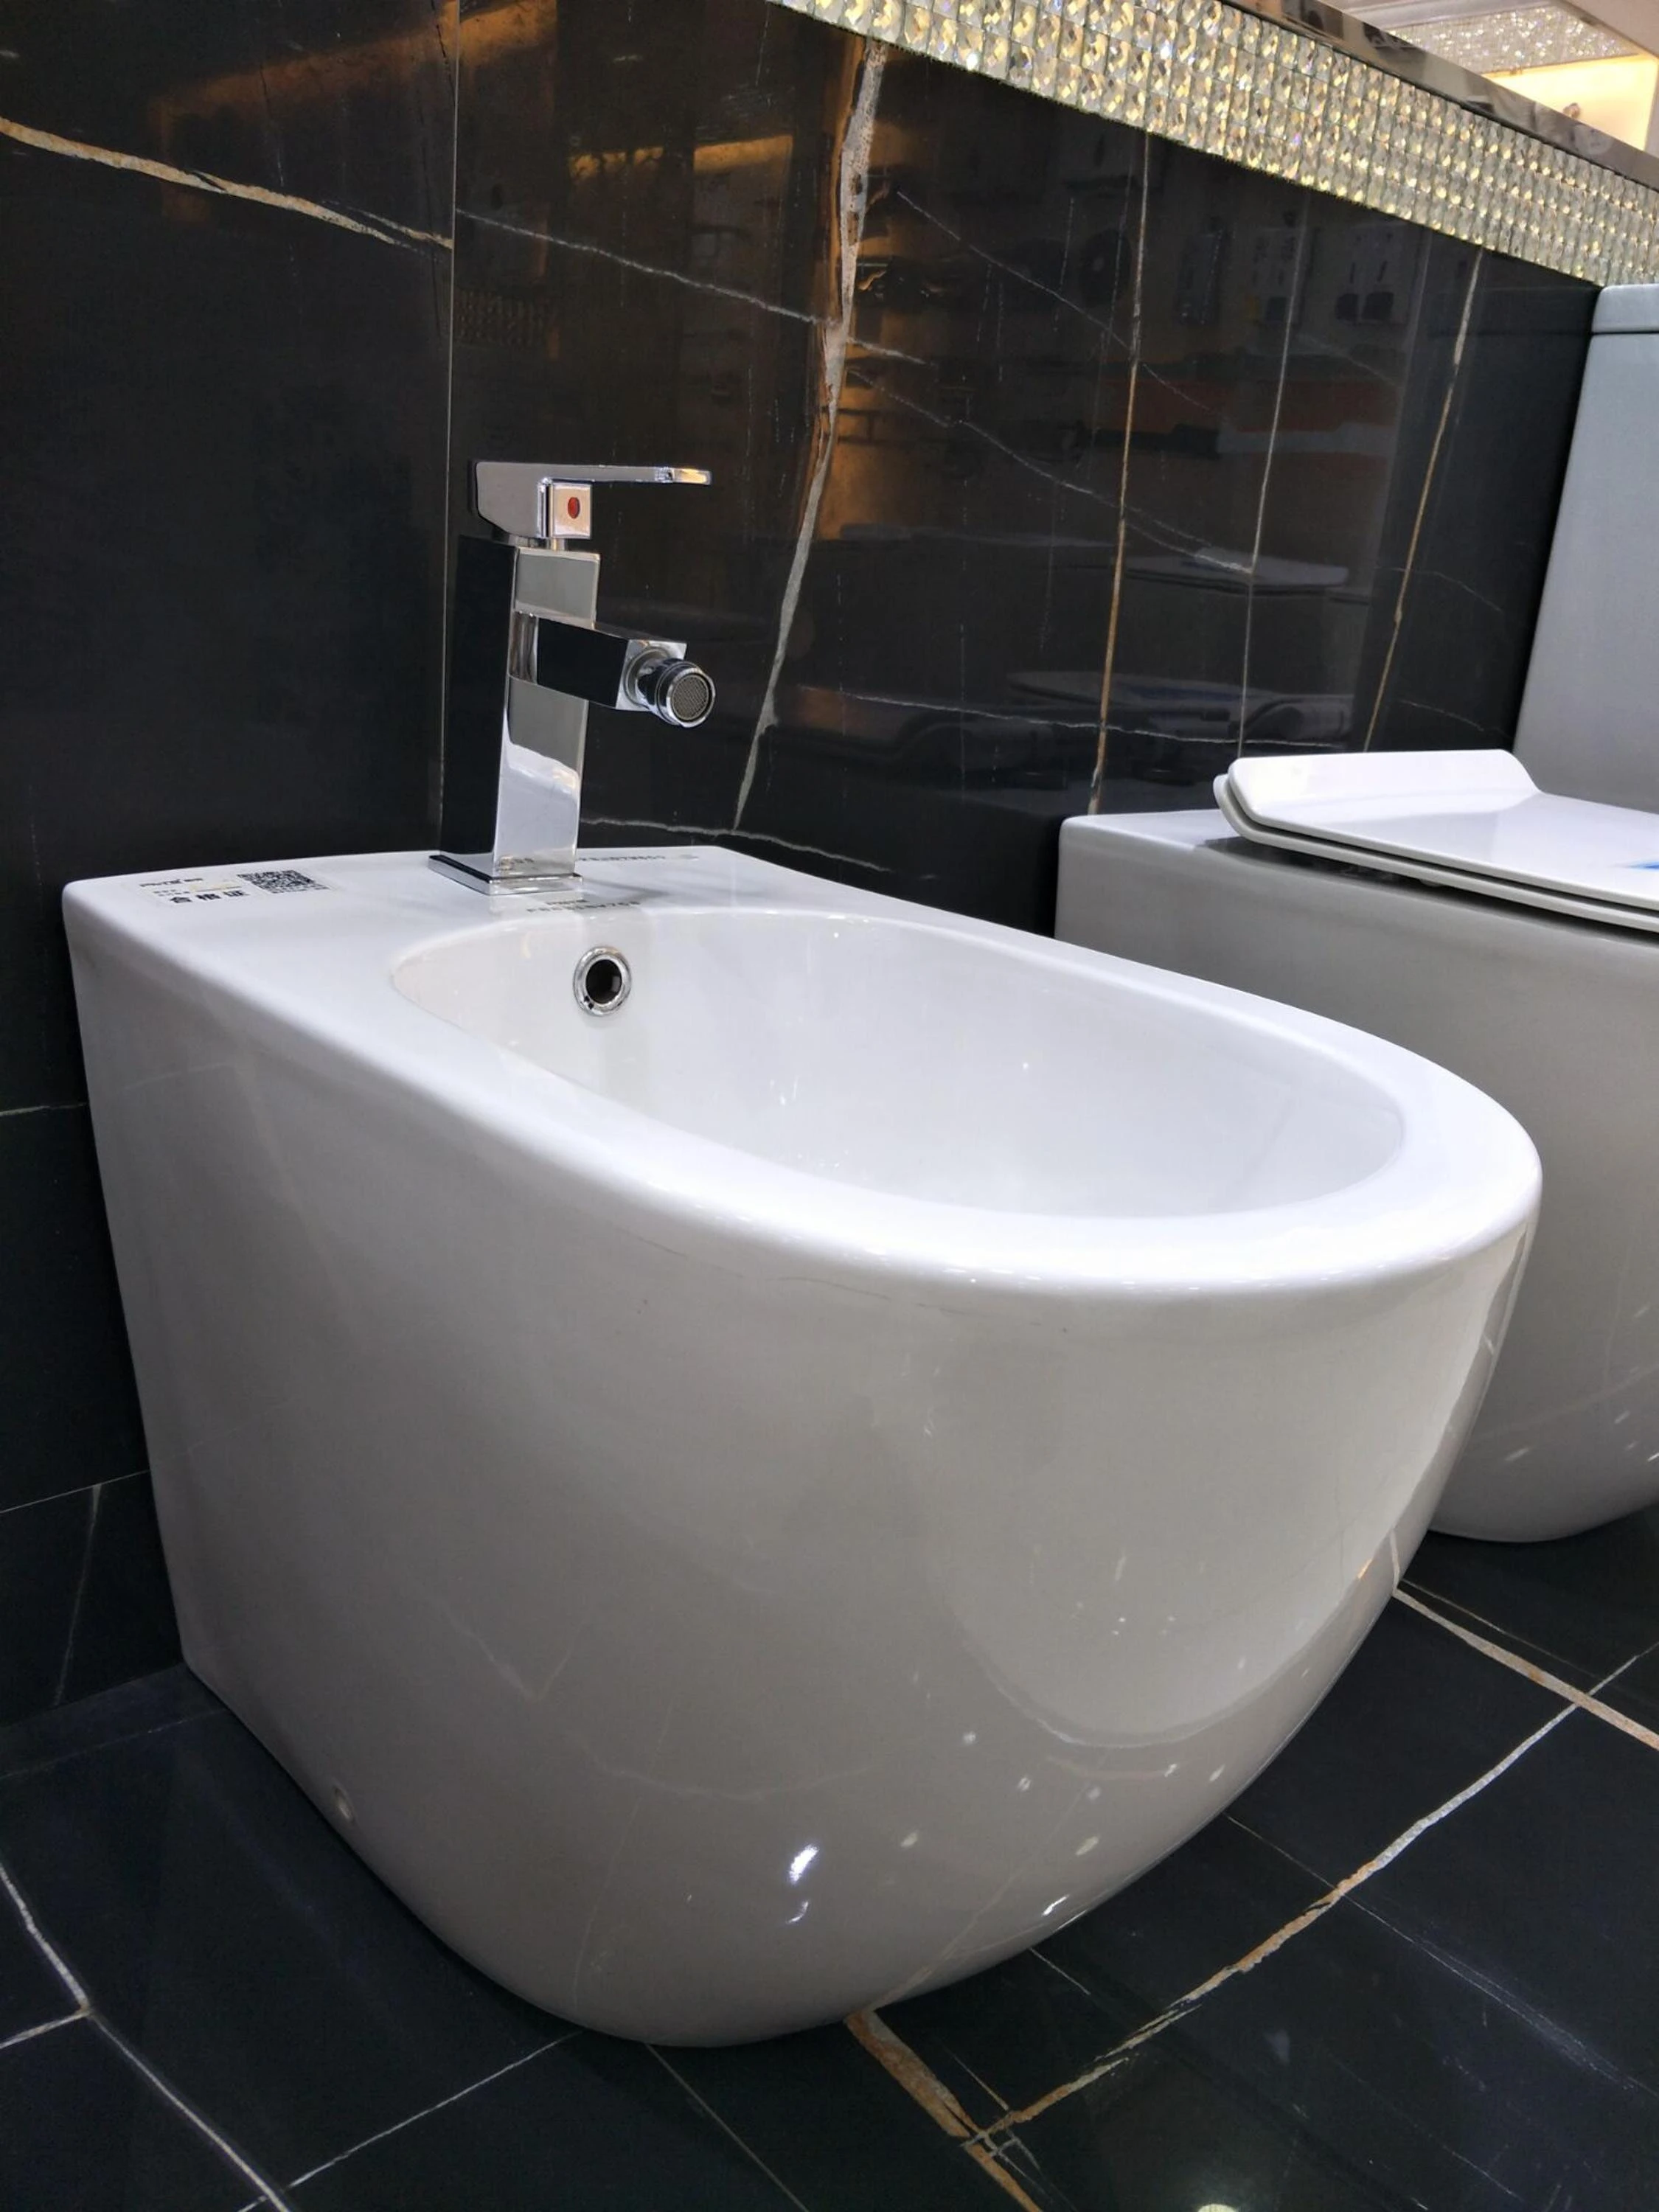 China Supplier ceramic sanitary ware Bathroom one piece hygiene toilet bidet for lady